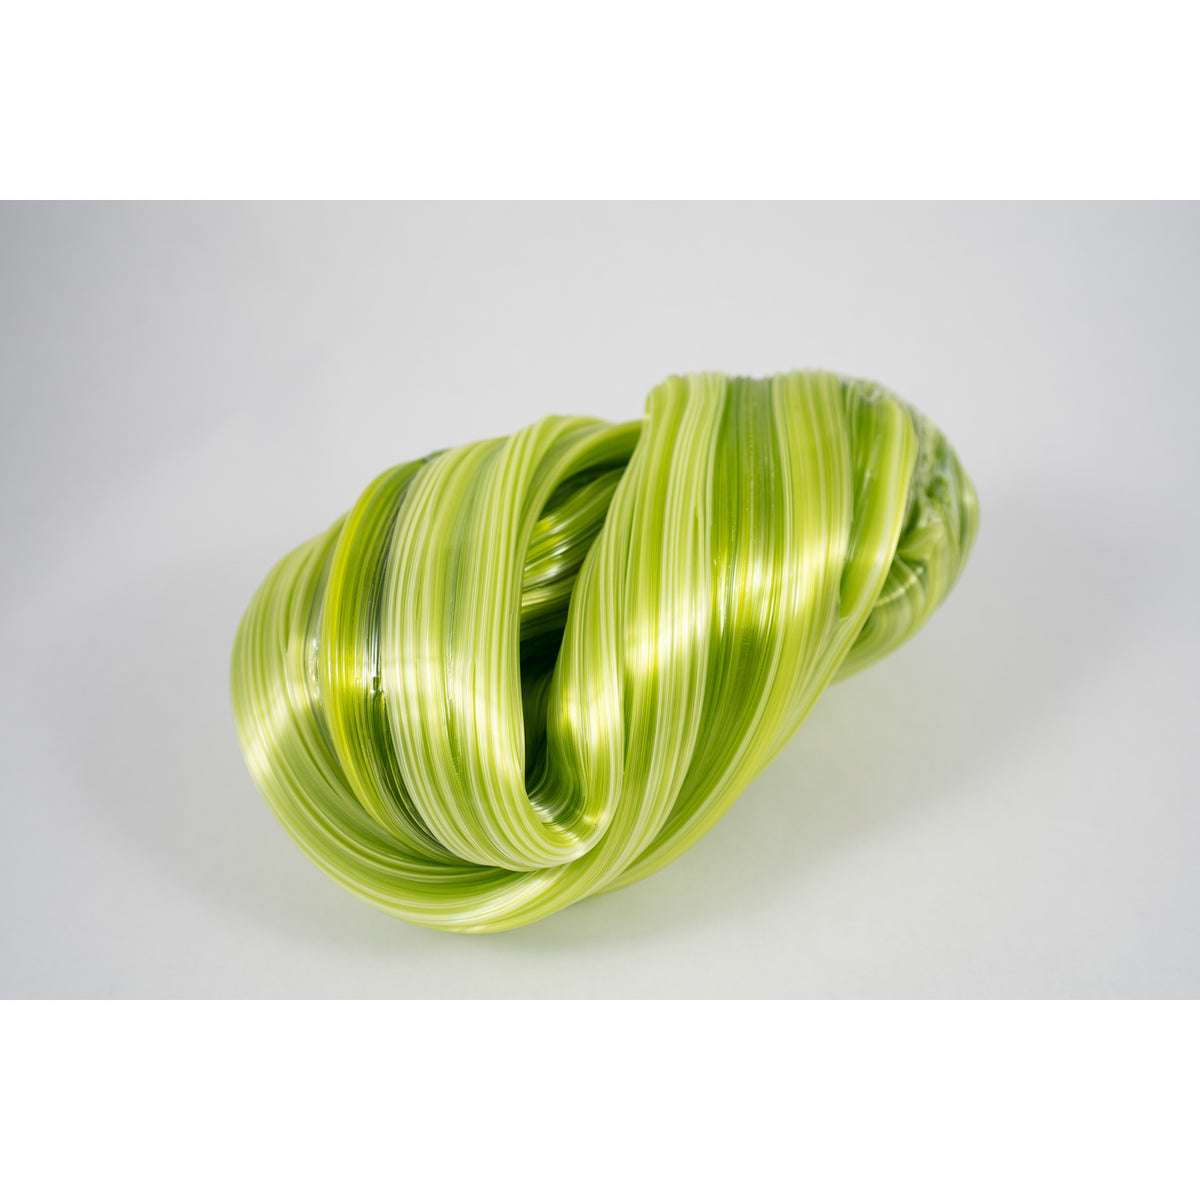 Taygan Appleton - Silk Knot Green Apple, 3" x 7" x 4"